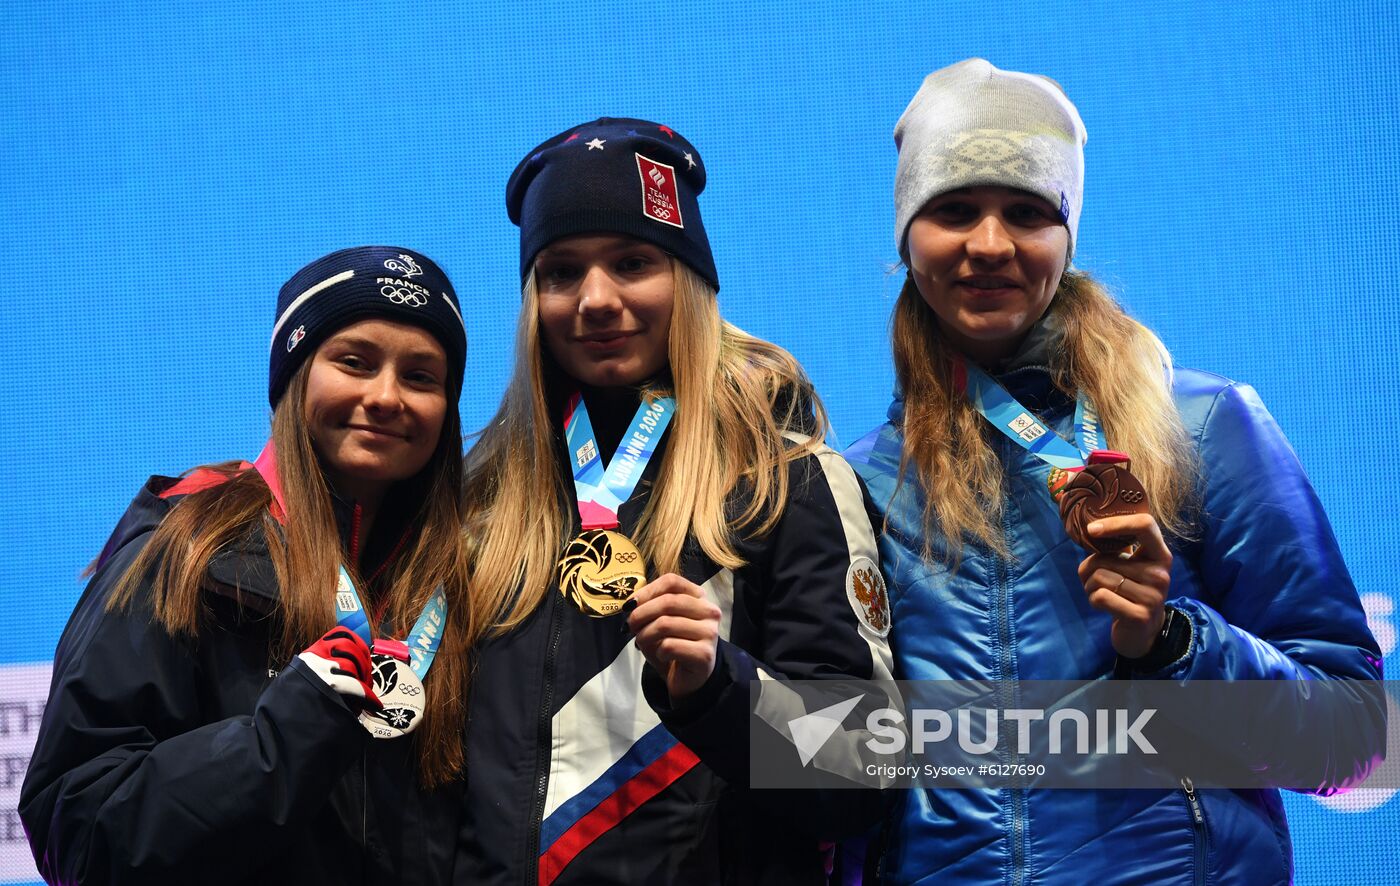 Switzerland Youth Olympic Games Biathlon Women Individual